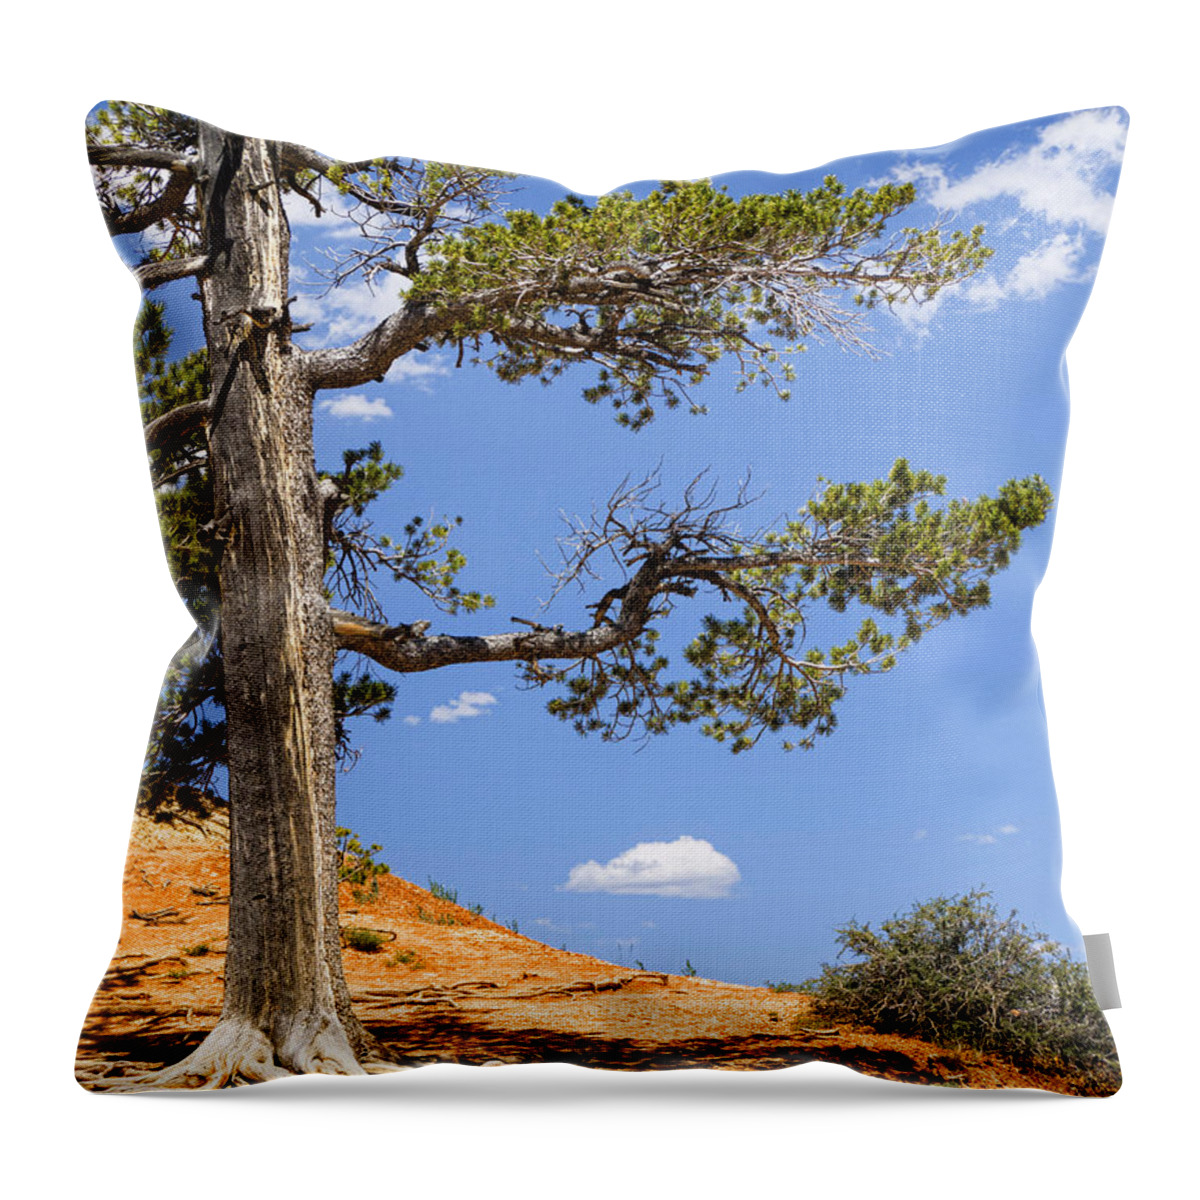 Desert Throw Pillow featuring the photograph Canyon Rim by Brenda Kean